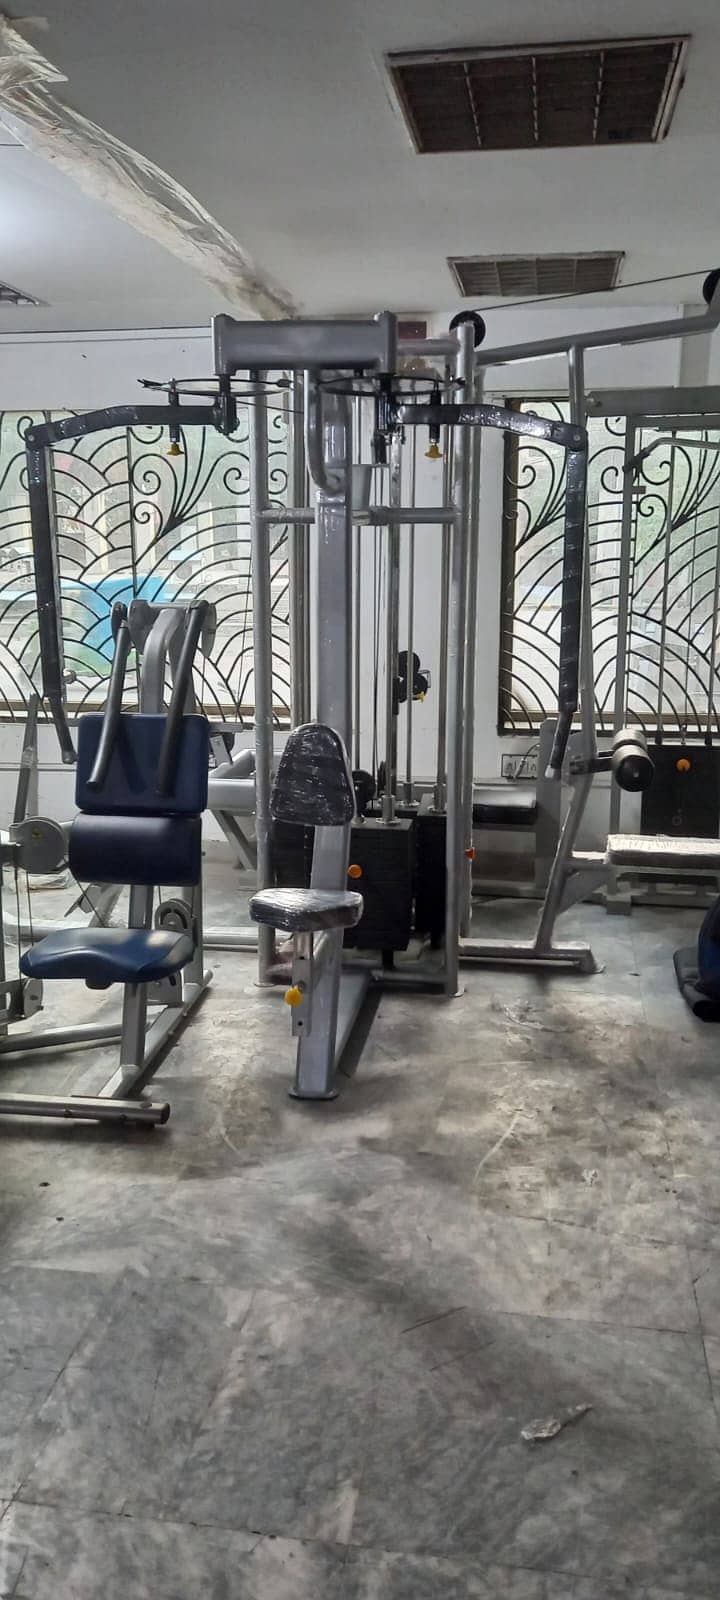 multi functional machine dumbbell gym setup treadmill elliptical plate 9